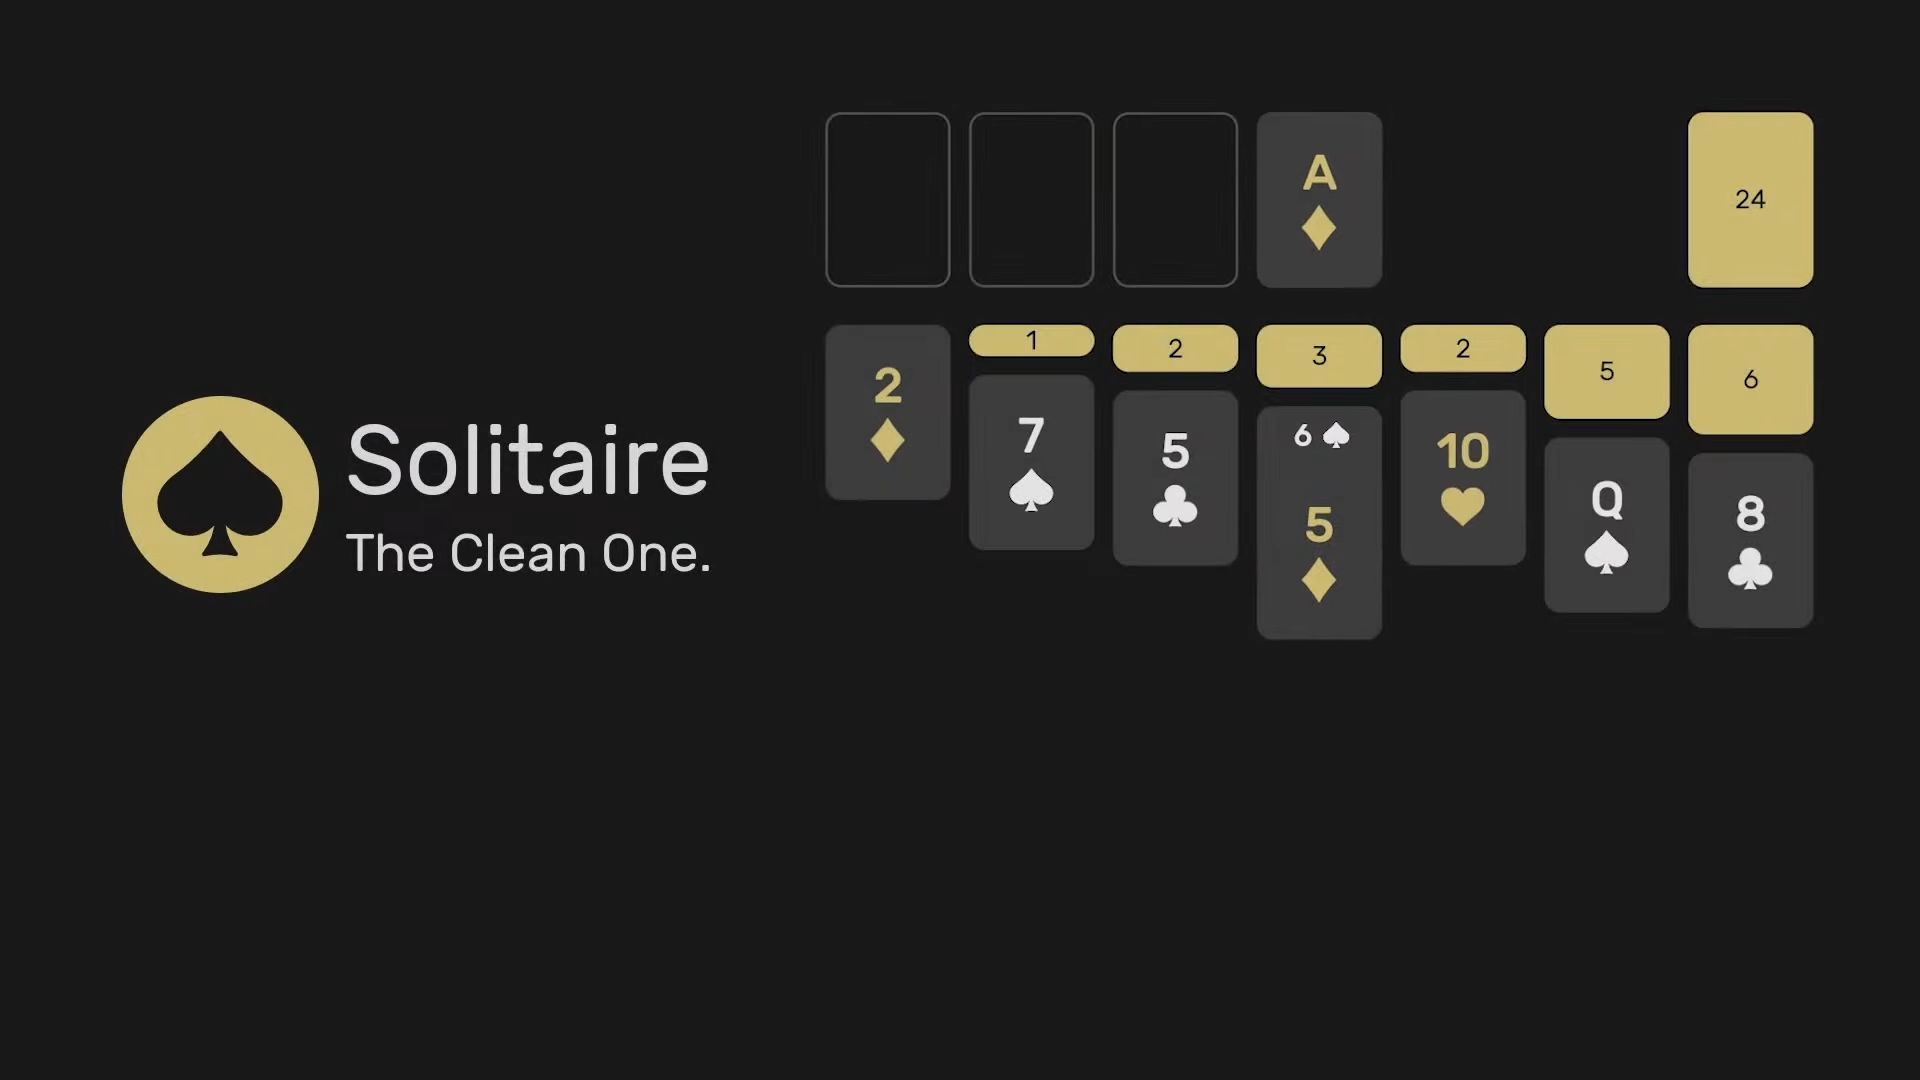 Download Solitaire - The Clean One für Android kostenlos.